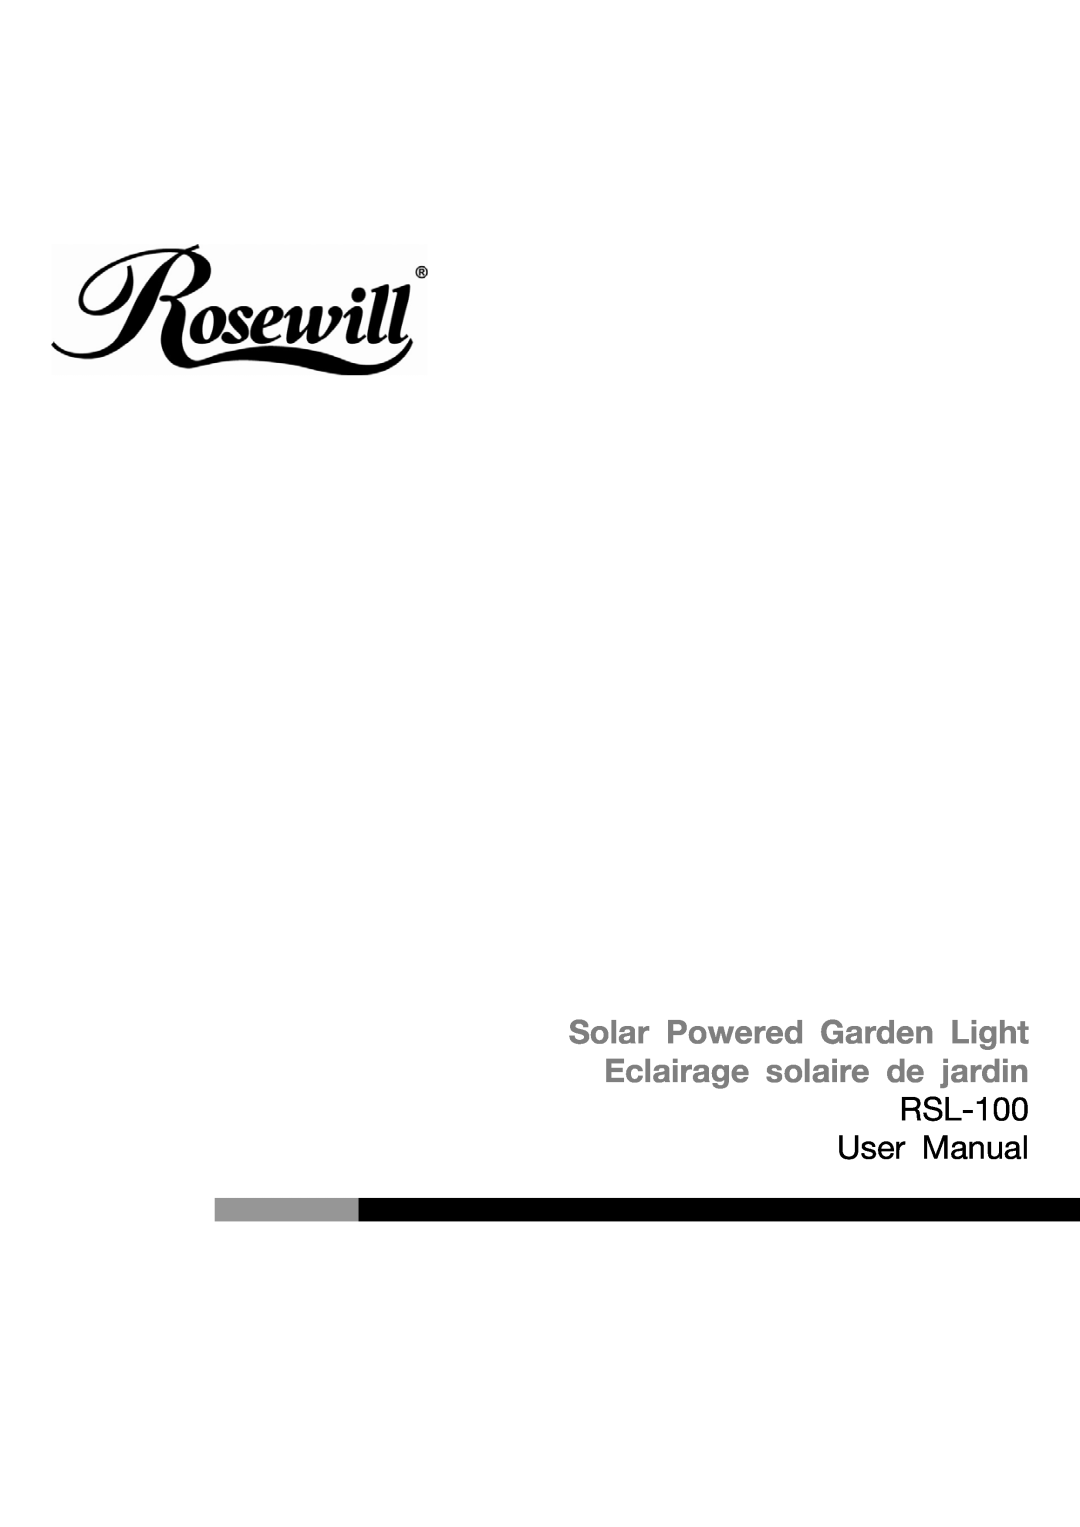 Rosewill RSL-100 user manual Solar Powered Garden Light, Eclairage solaire de jardin 